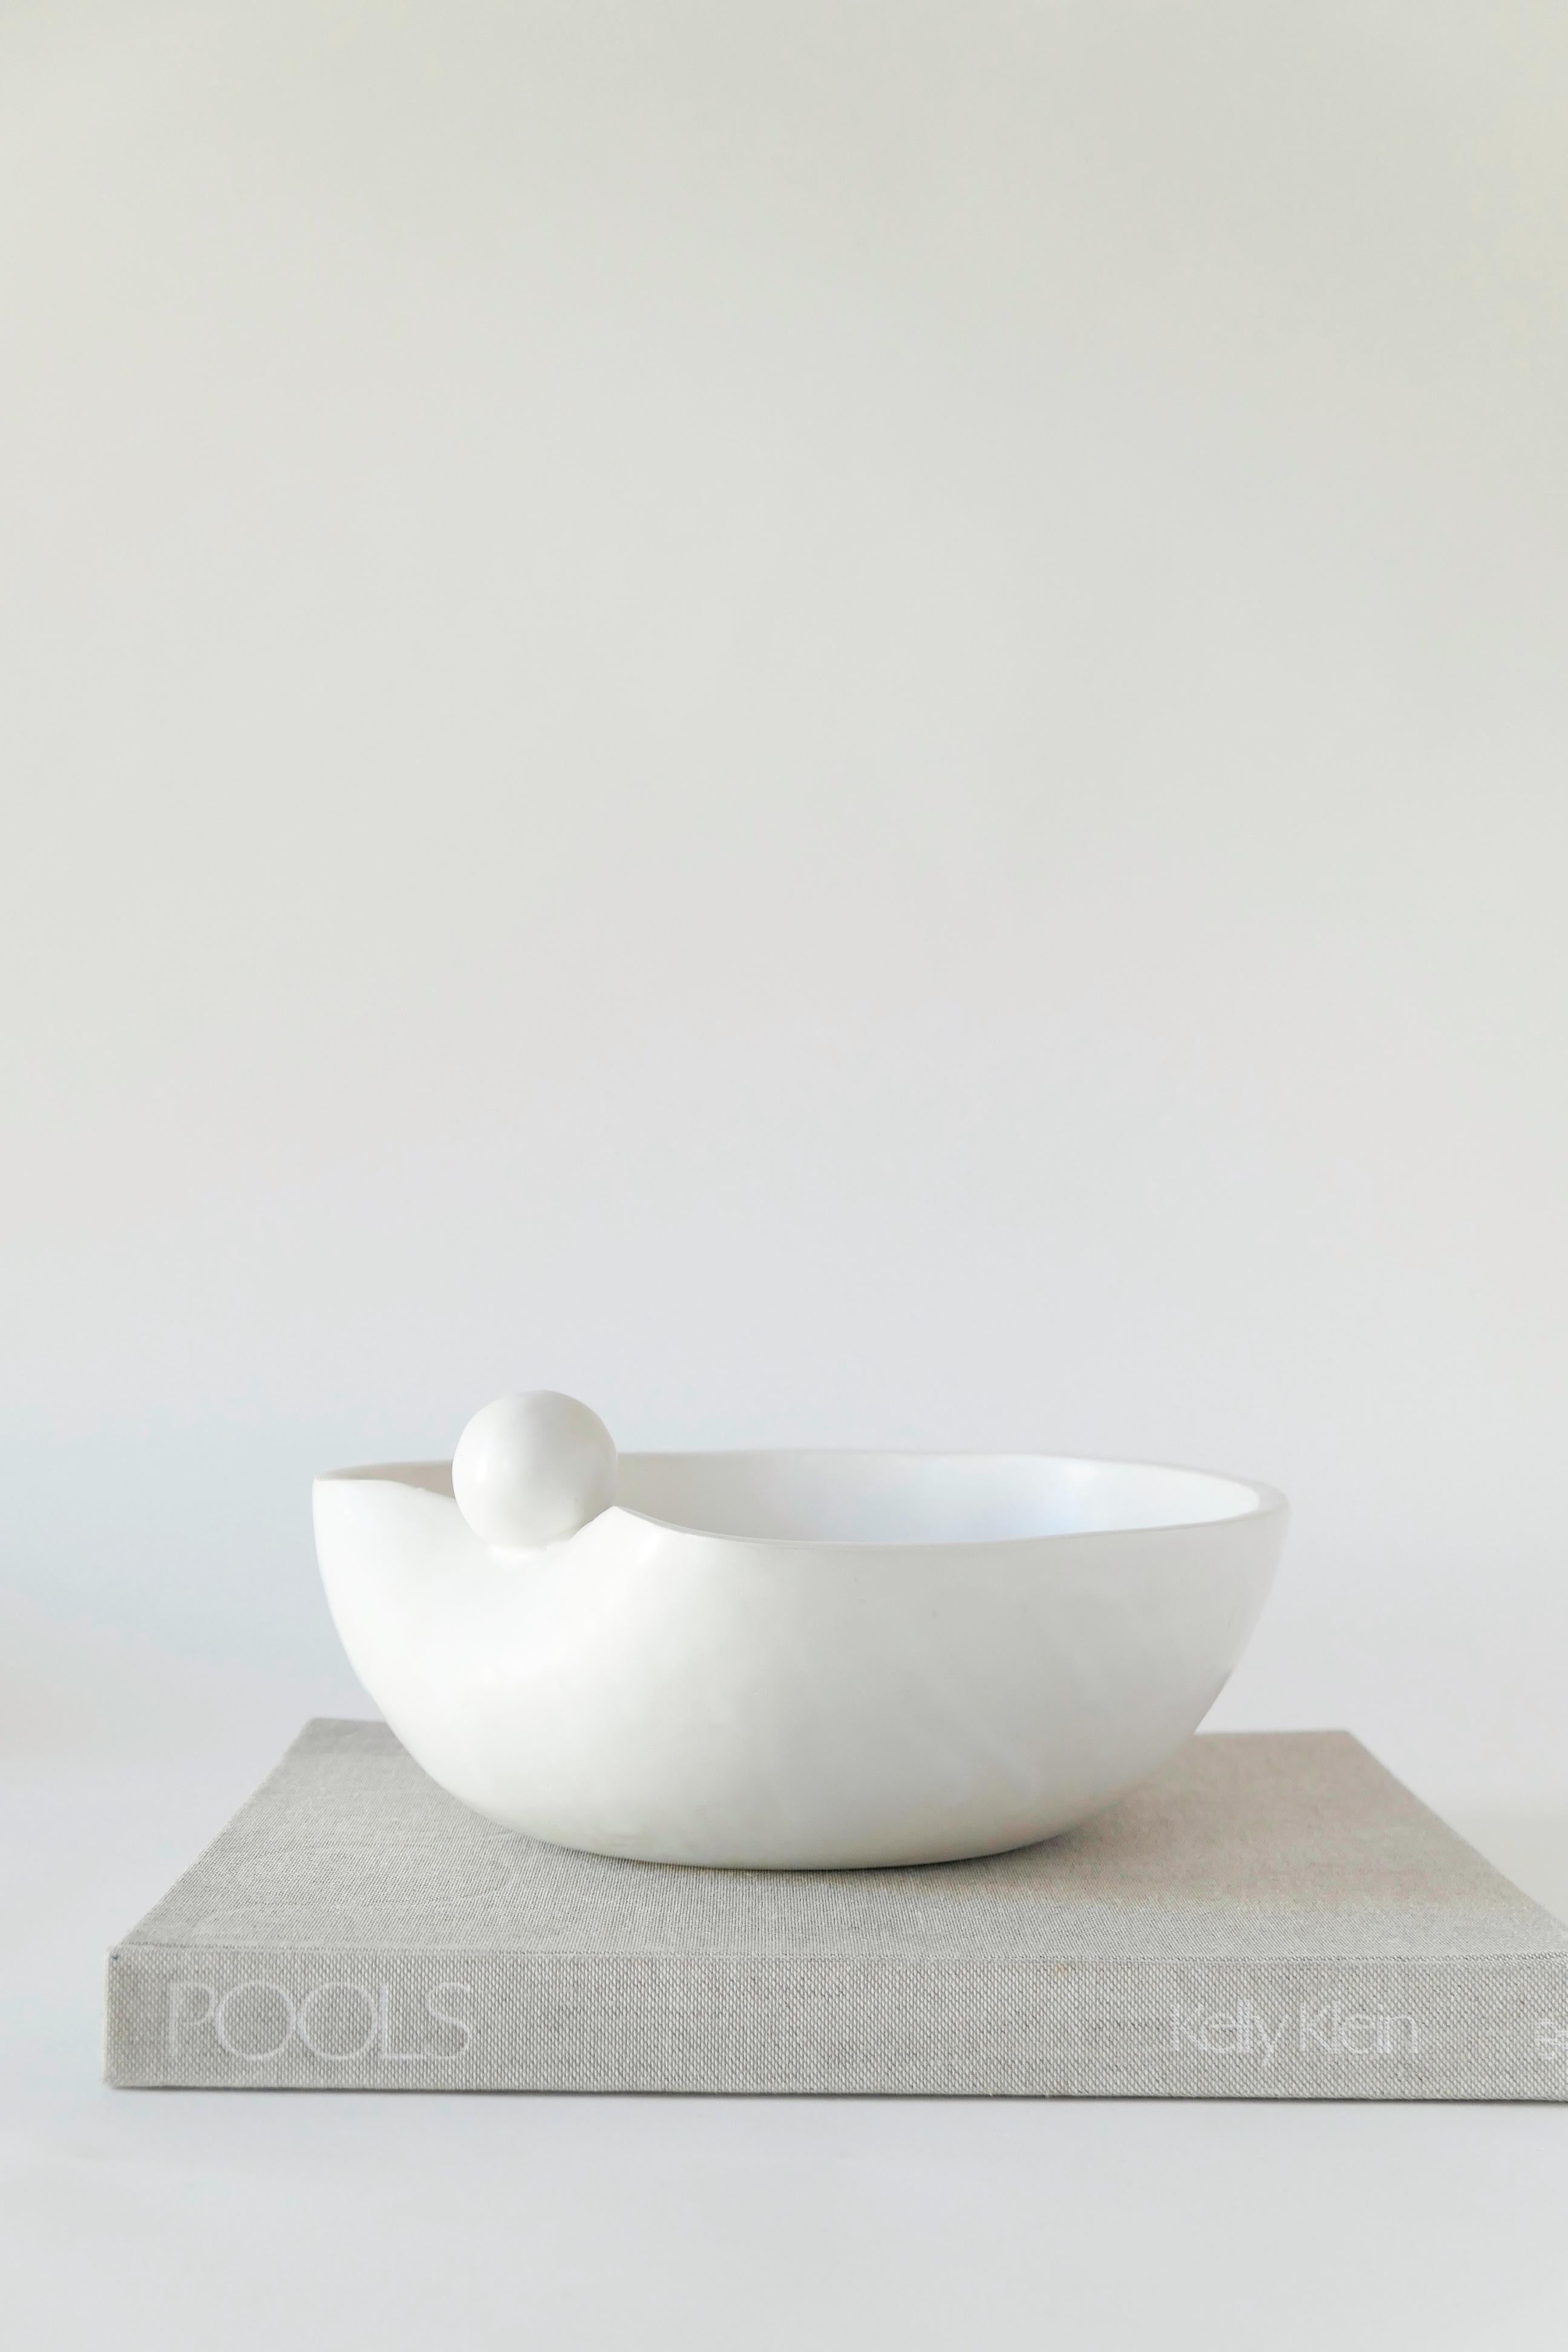 American Decorative Contemporary Curved Handmade Ceramic Bowl For Sale